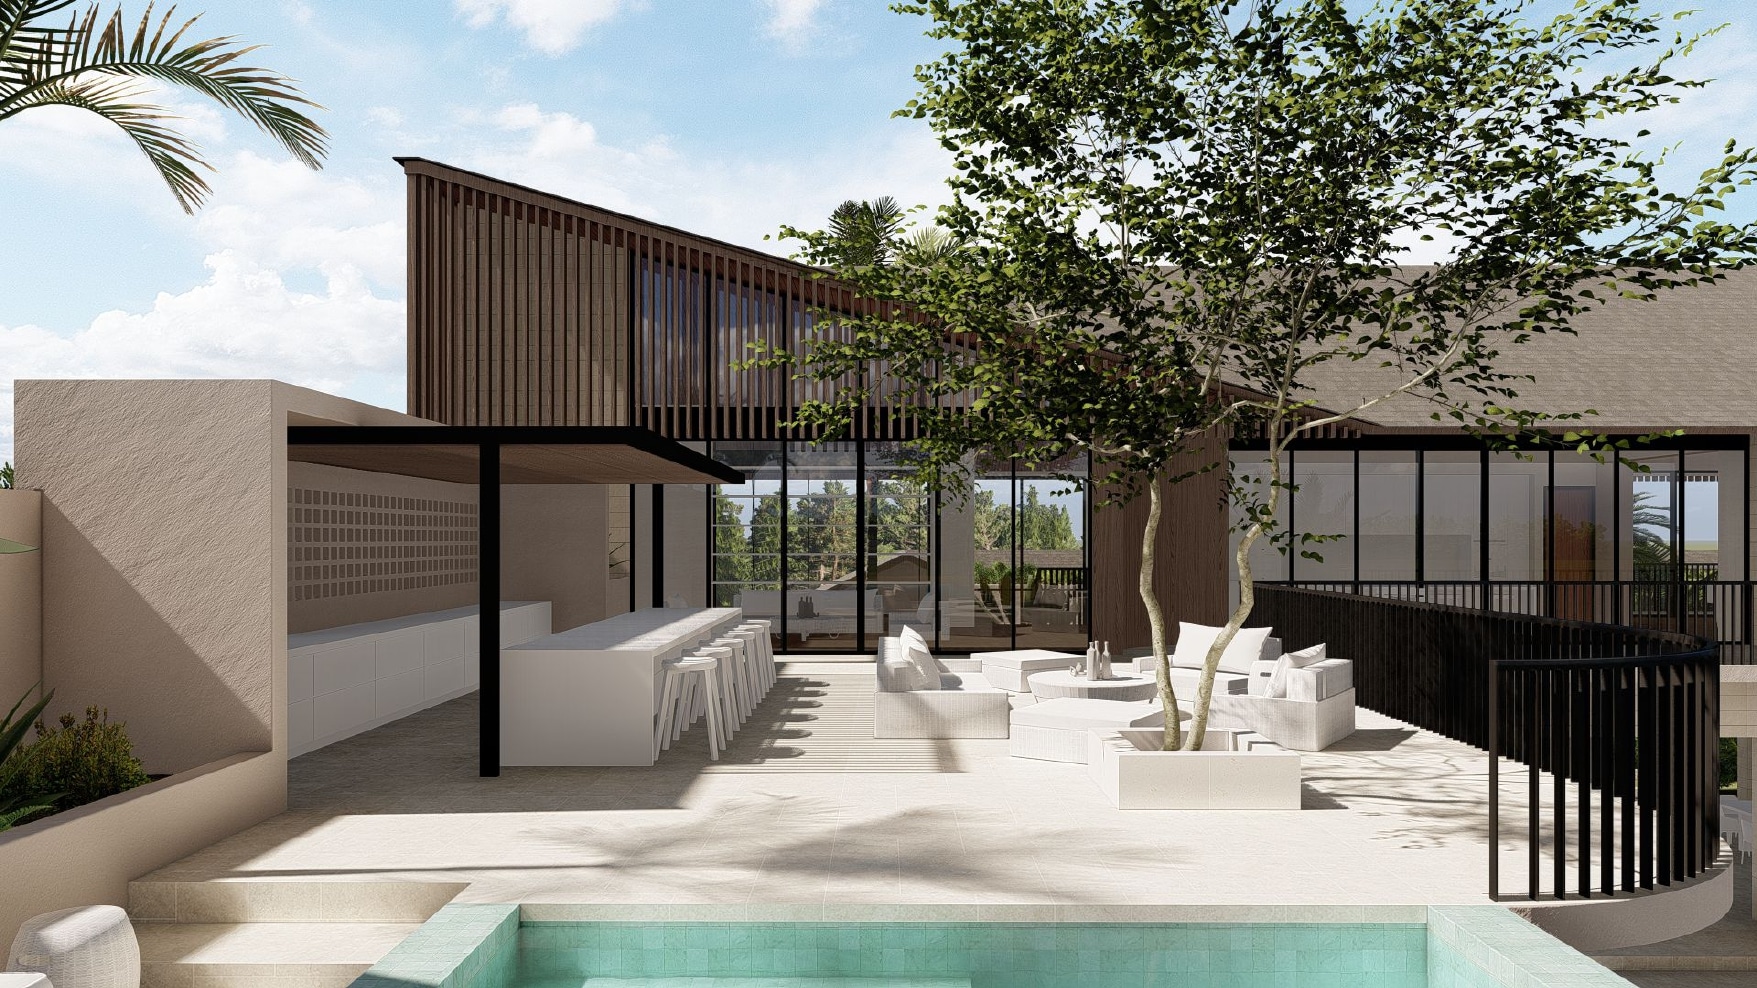 Design Assembly - Berawa 15 Villa - Bali Architect - Interior Design - Bali Villa - Outside Dining - Terrace - Wooden Facade - Building Facade